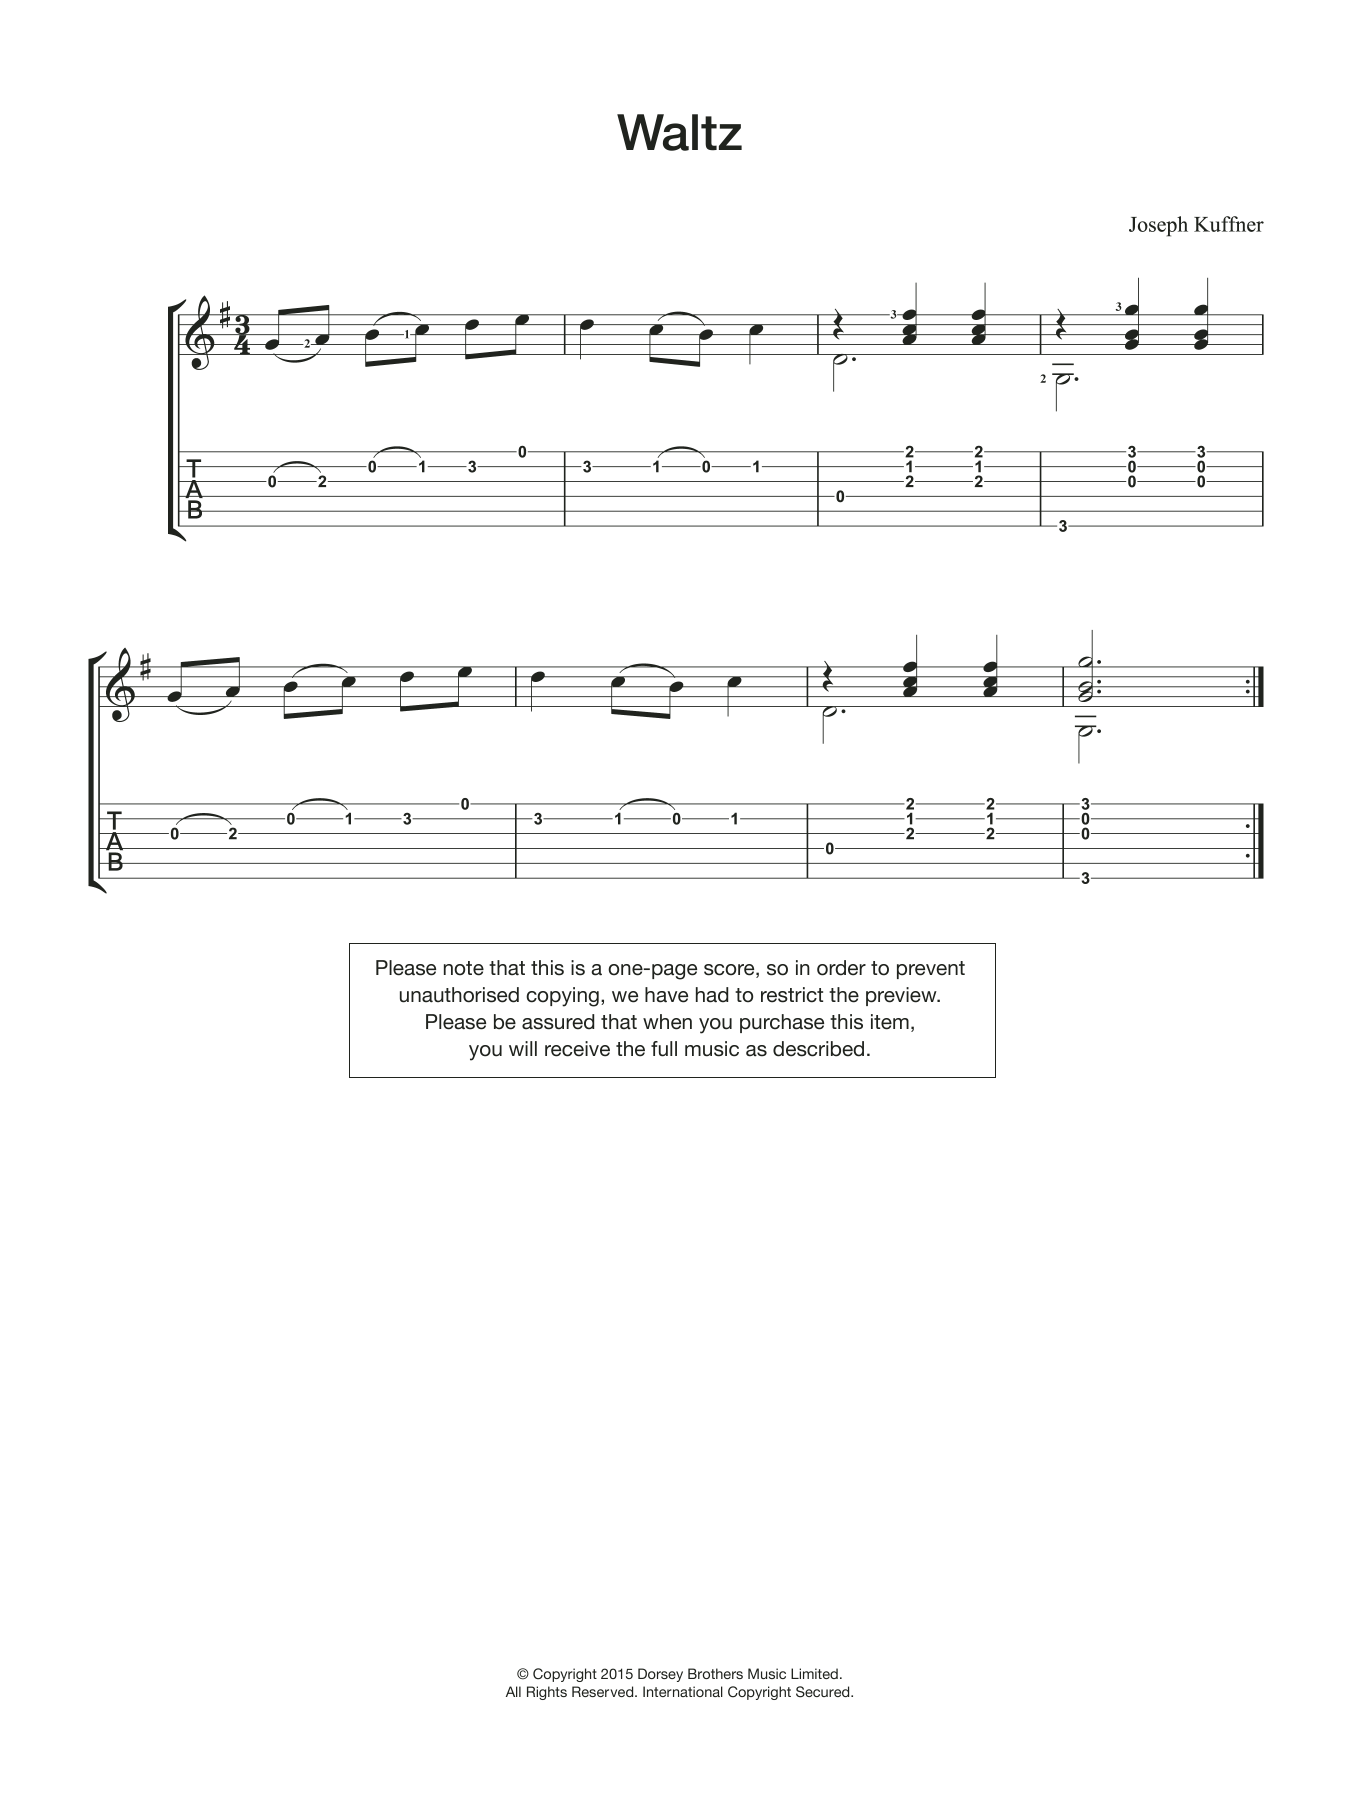 Download Joseph Kuffner Waltz Sheet Music